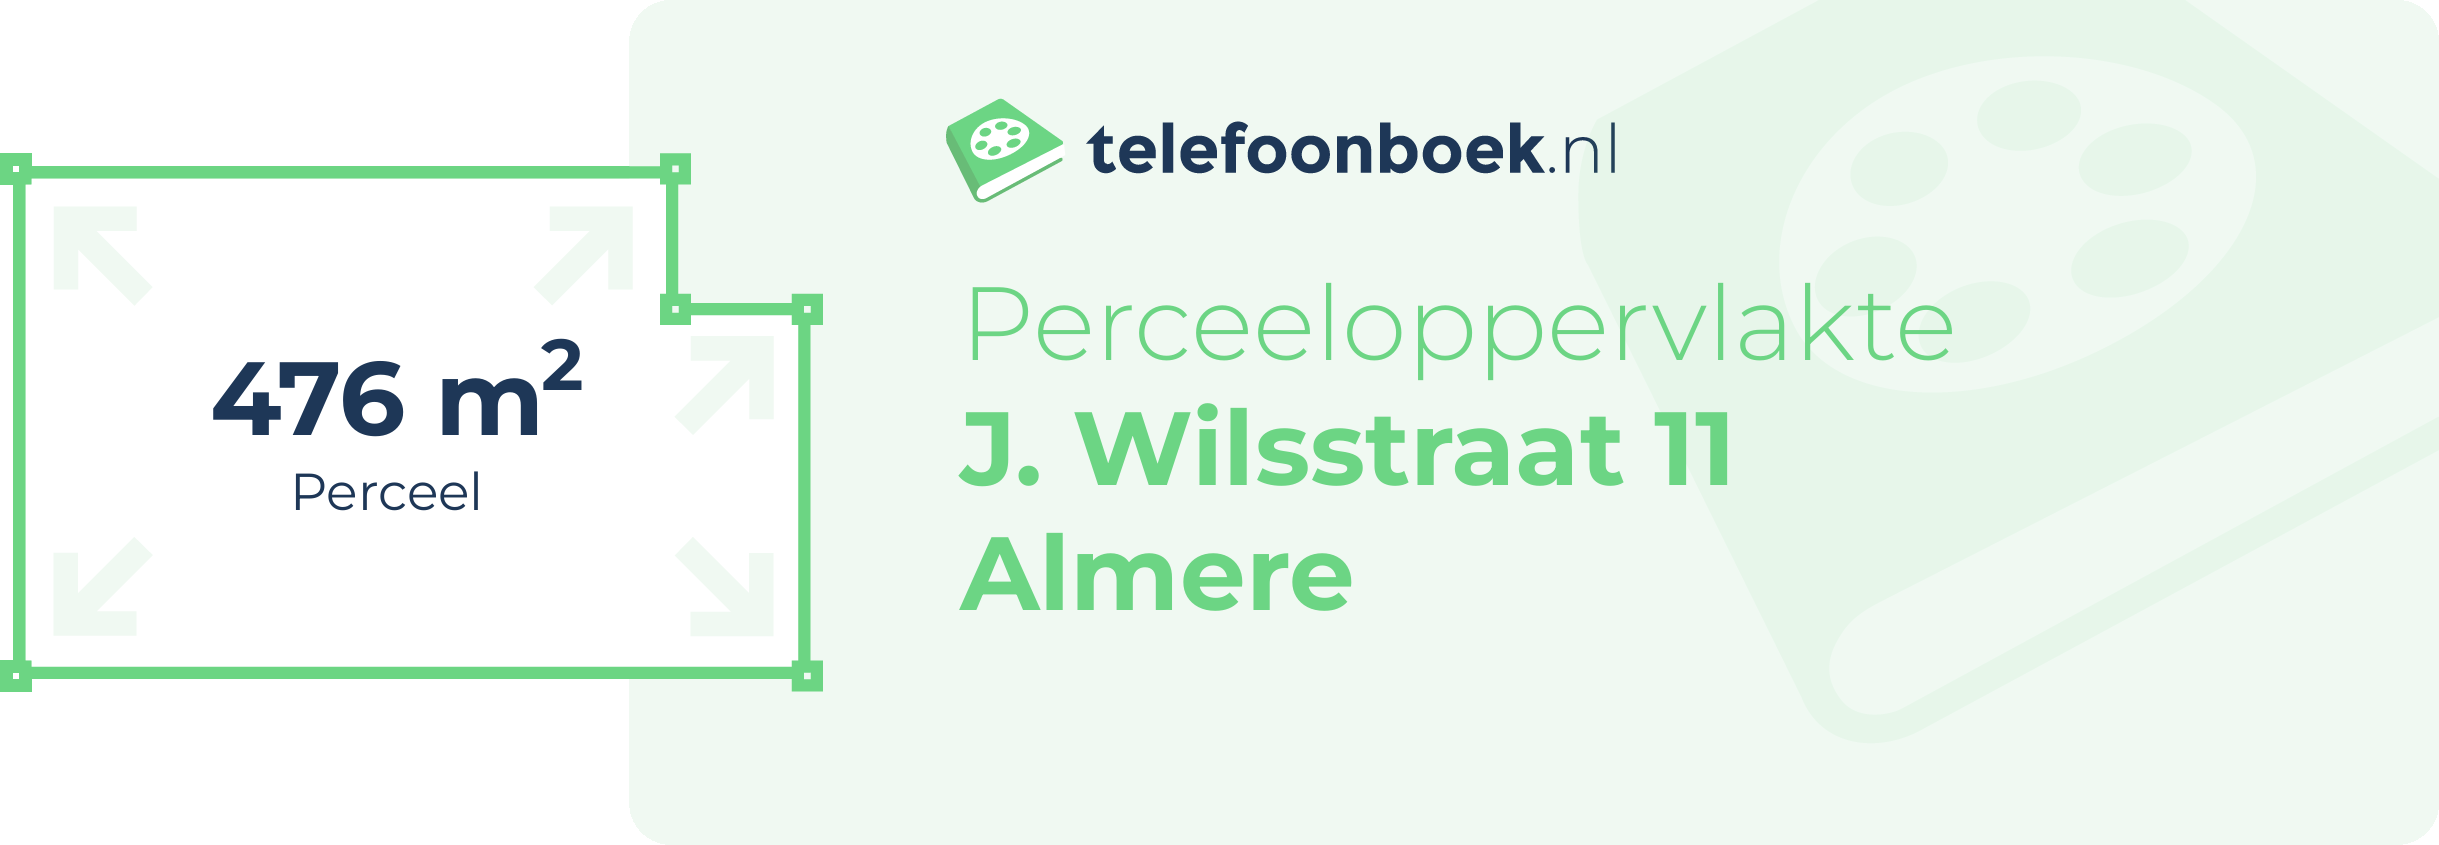 Perceeloppervlakte J. Wilsstraat 11 Almere